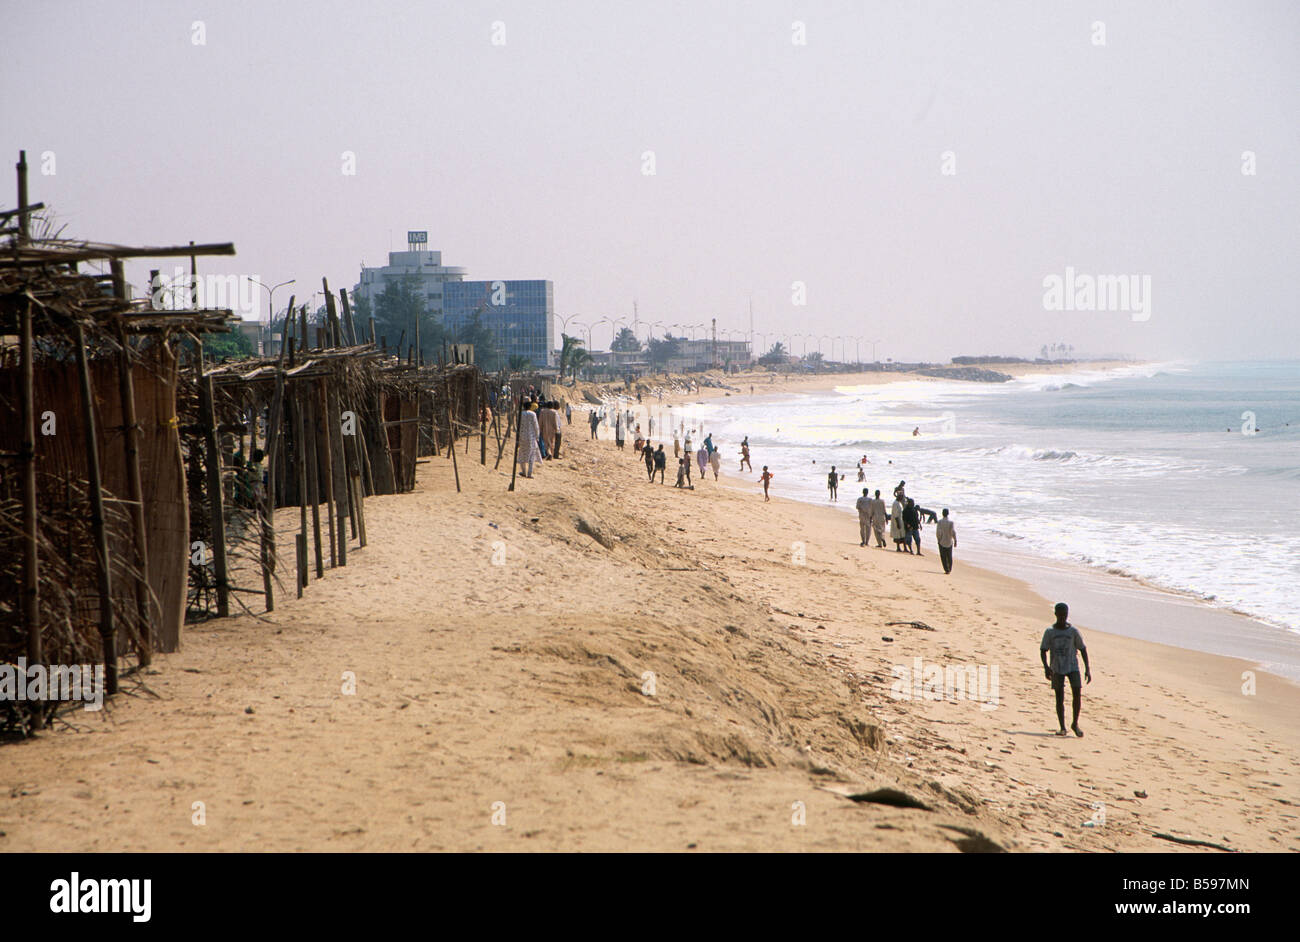 Nigeria beach hi-res stock photography - Alamy